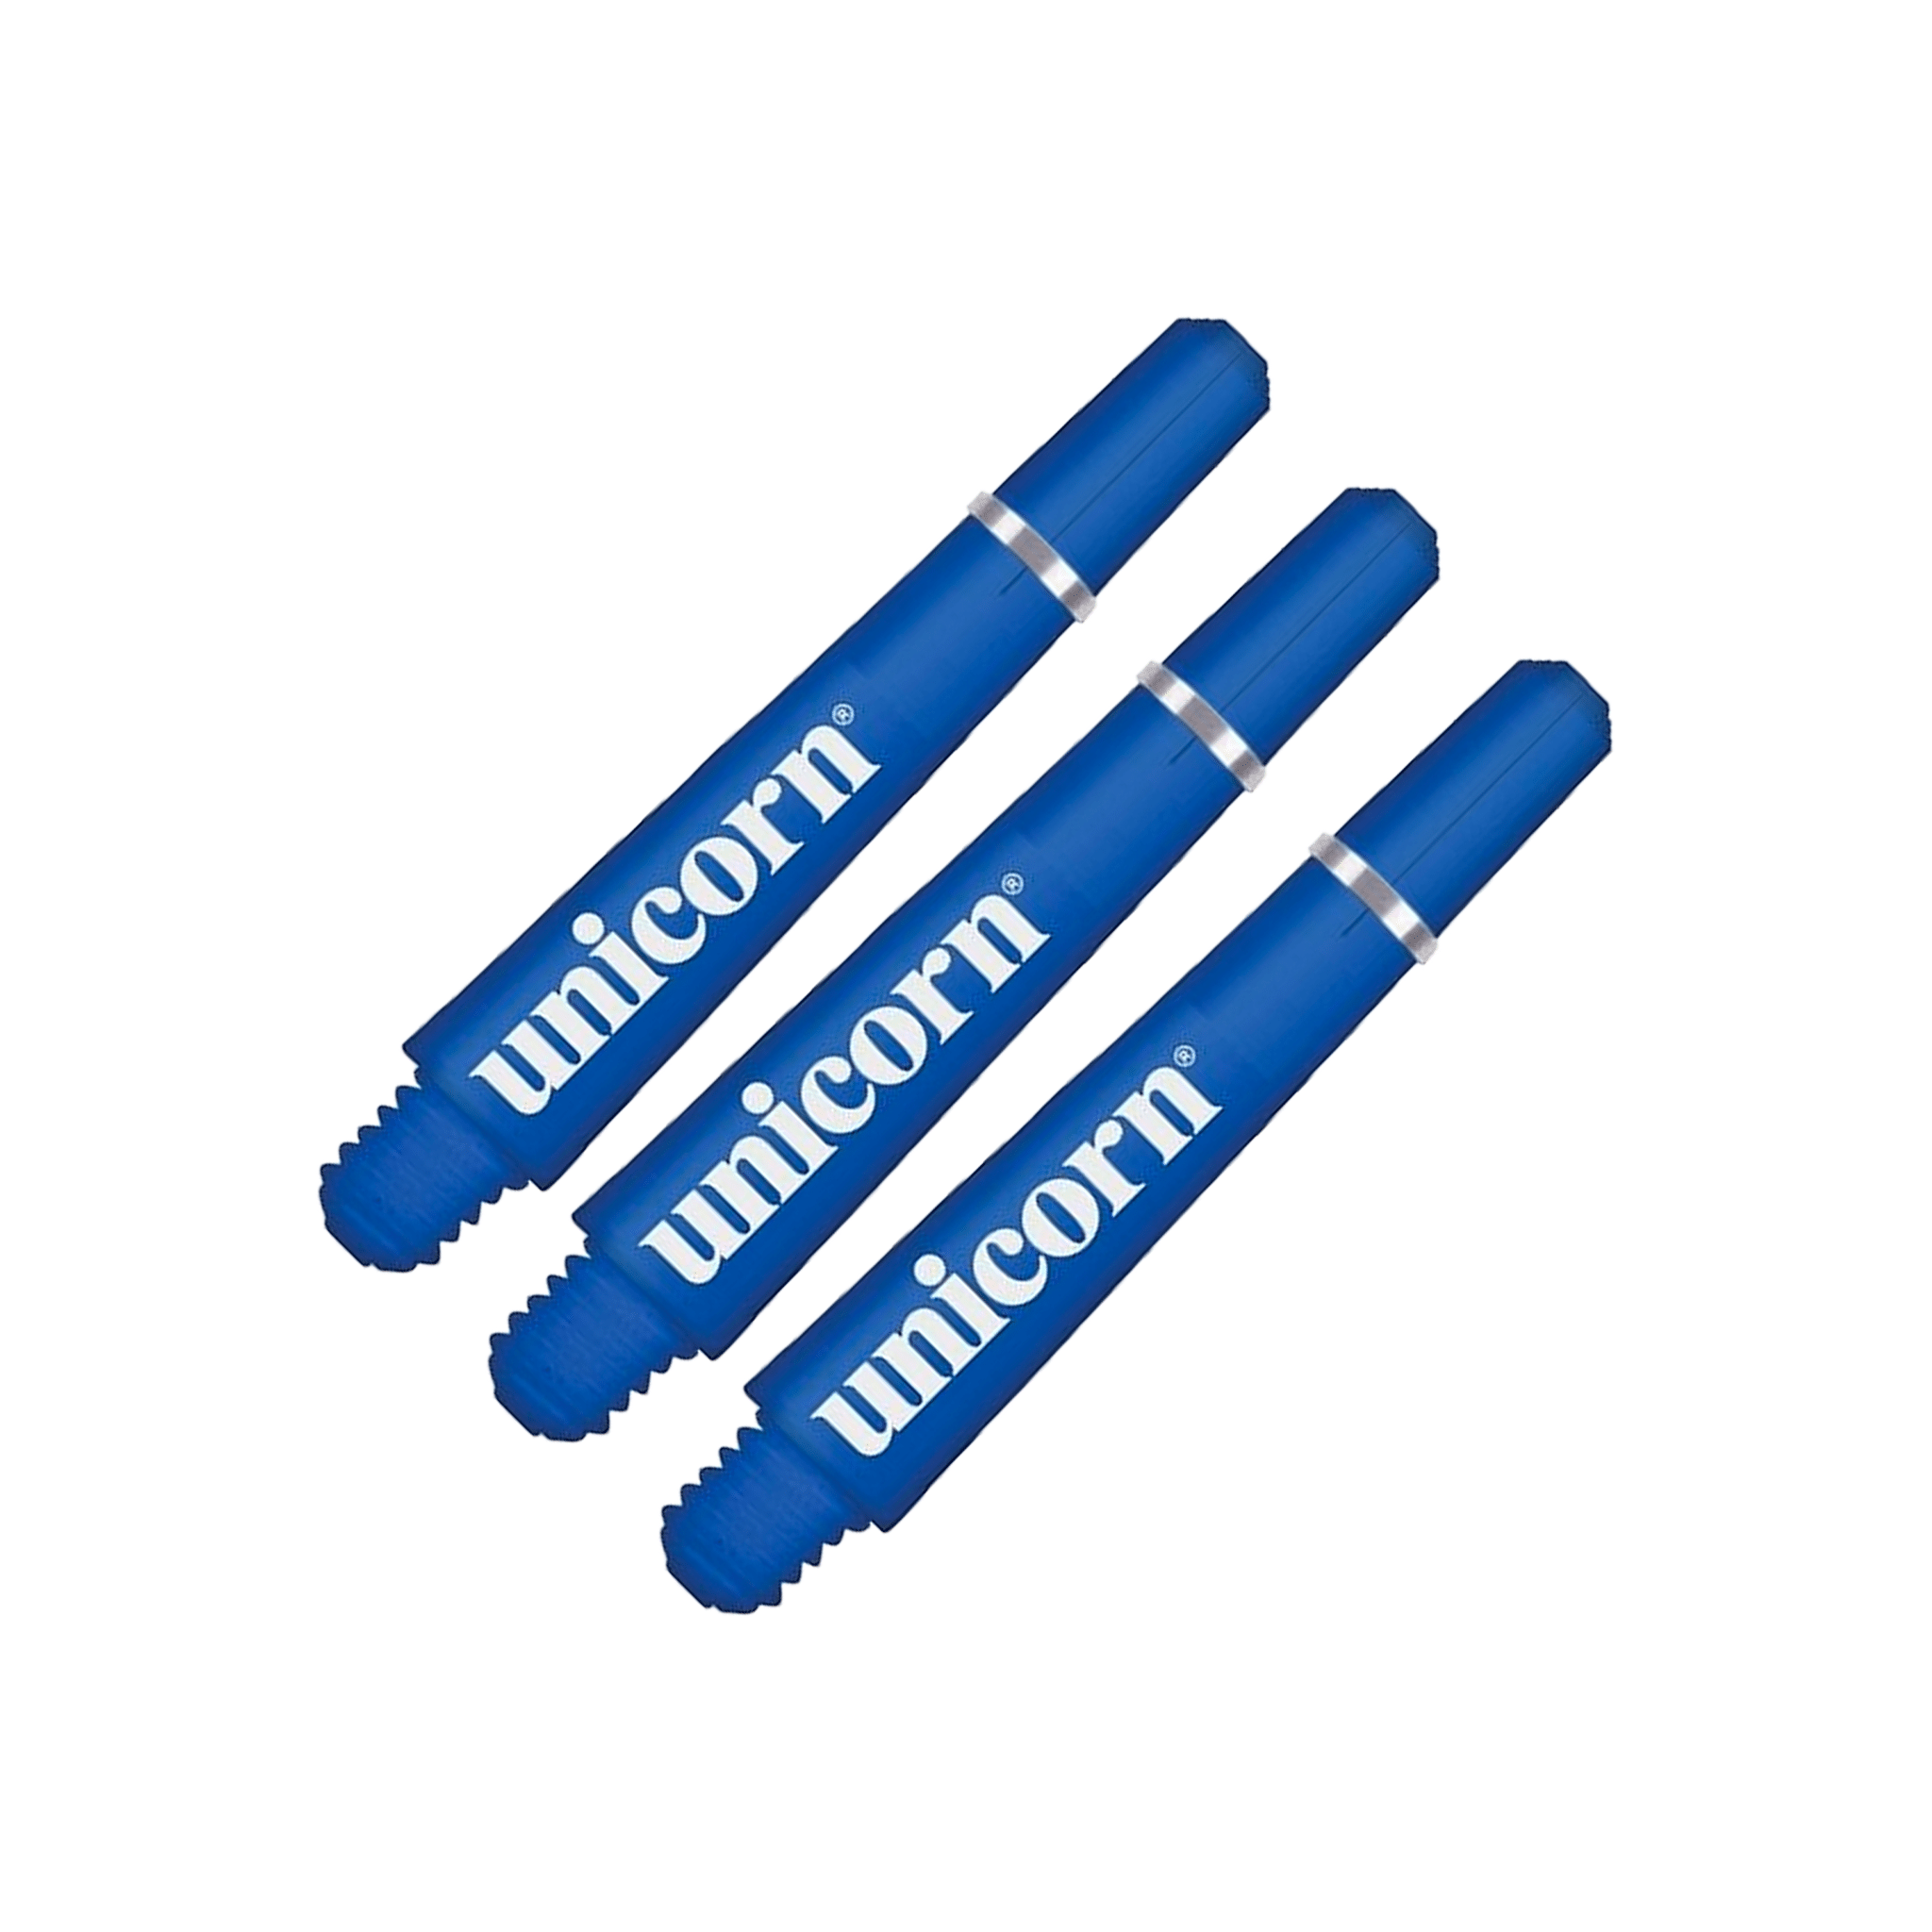 Unicorn Gripper 4 Polycarbonate Dart Shafts Blue / Short (35mm) Shafts